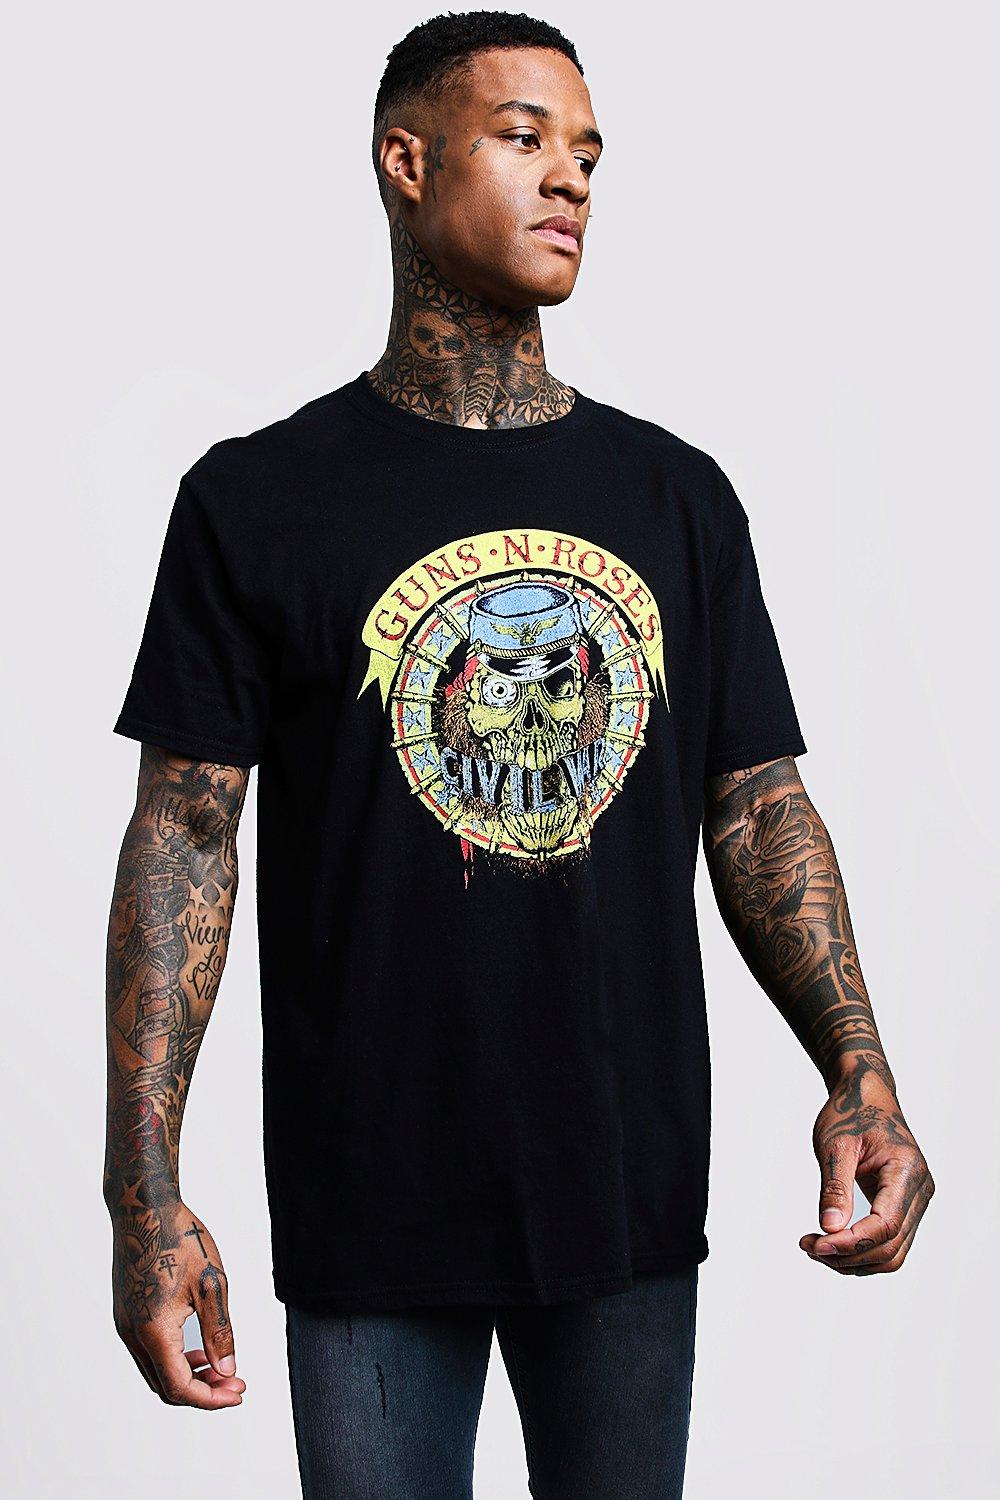 Guns N Roses Oversized Tour T Shirt Boohoo